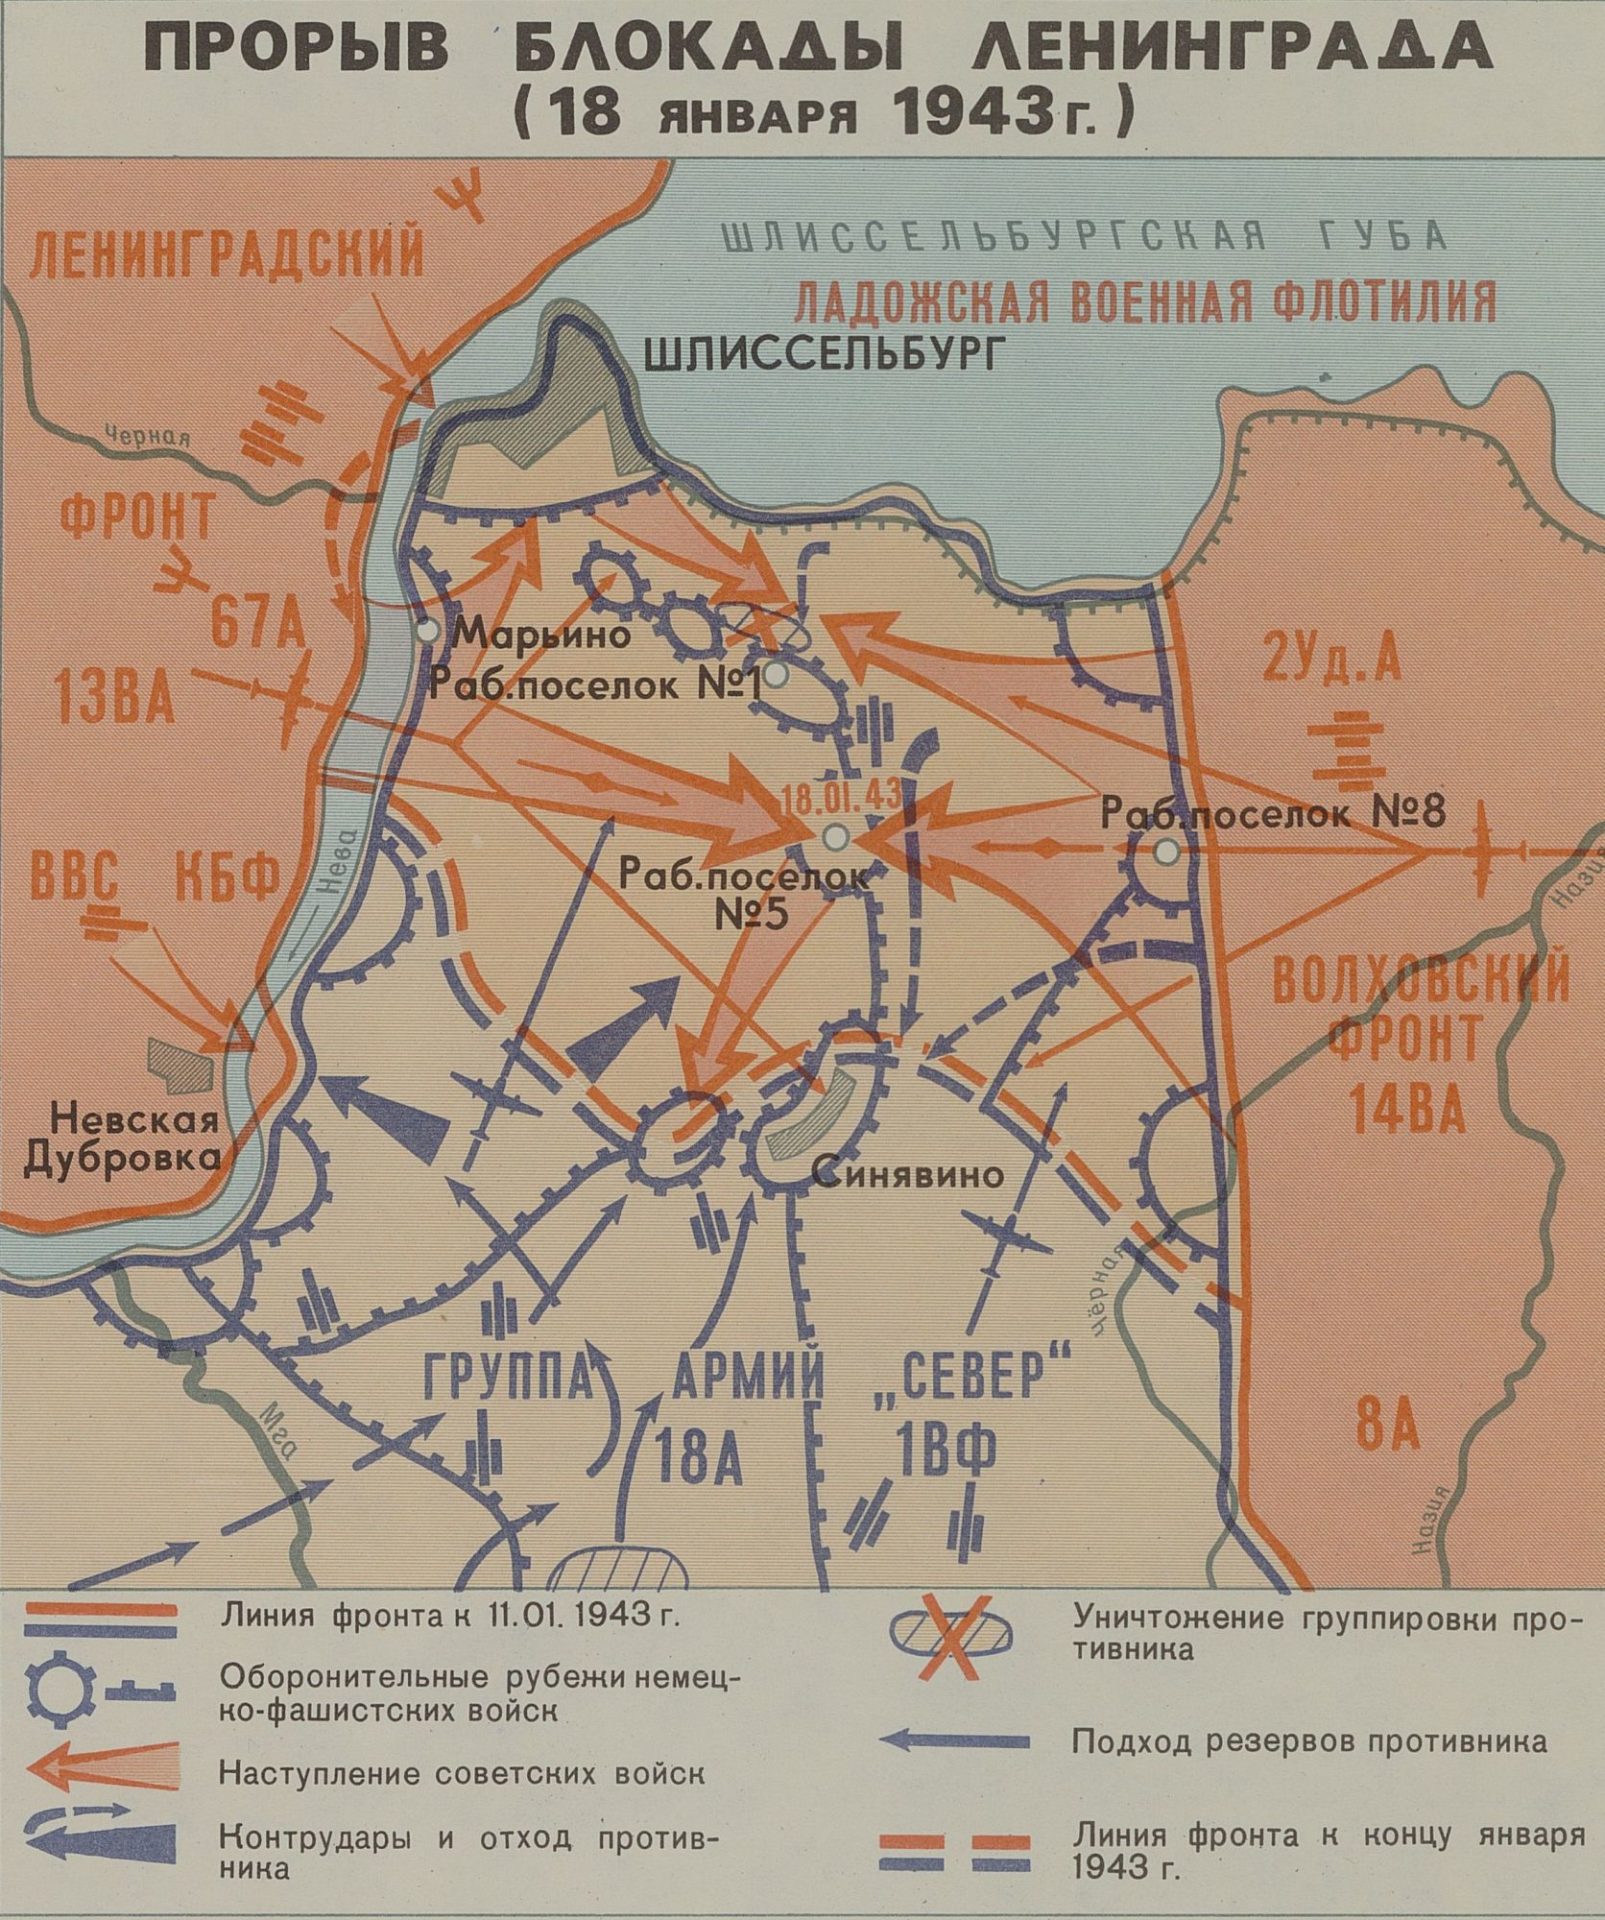 Операция блокада прорвана. Карта прорыва блокады Ленинграда в 1943. Прорыв блокады Ленинграда операция на карте.